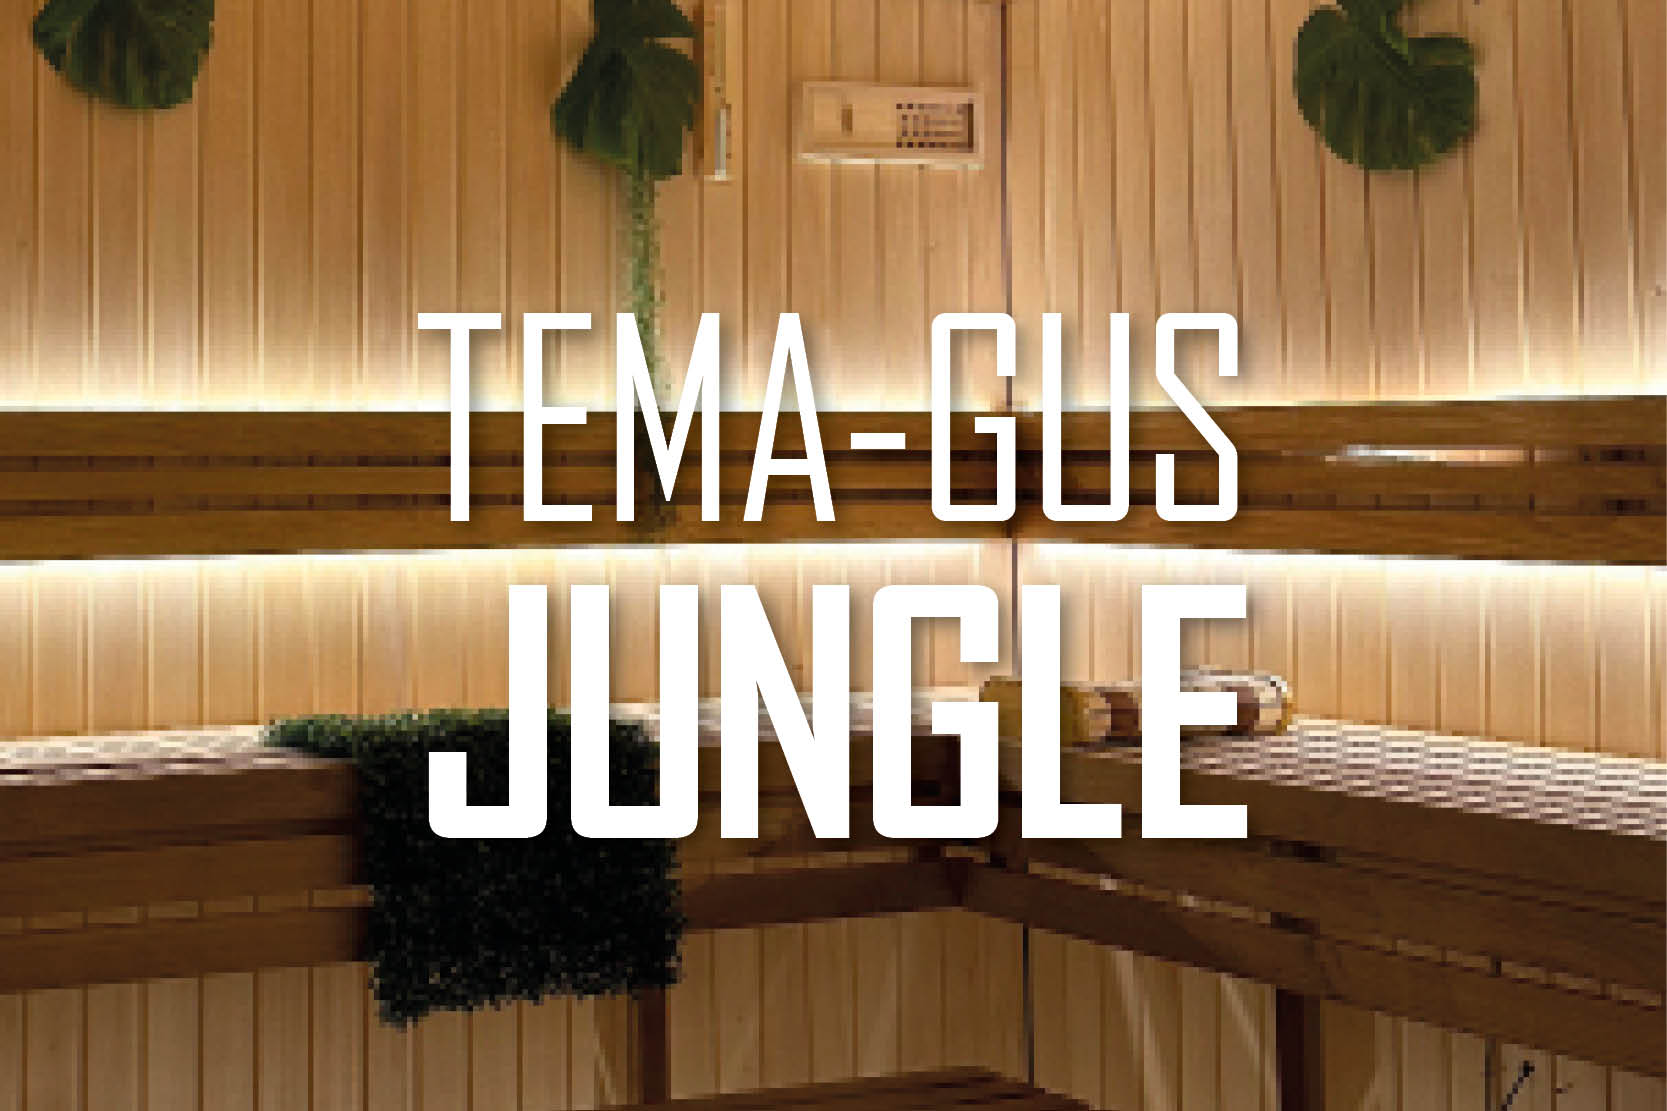 Tema-gus jungle